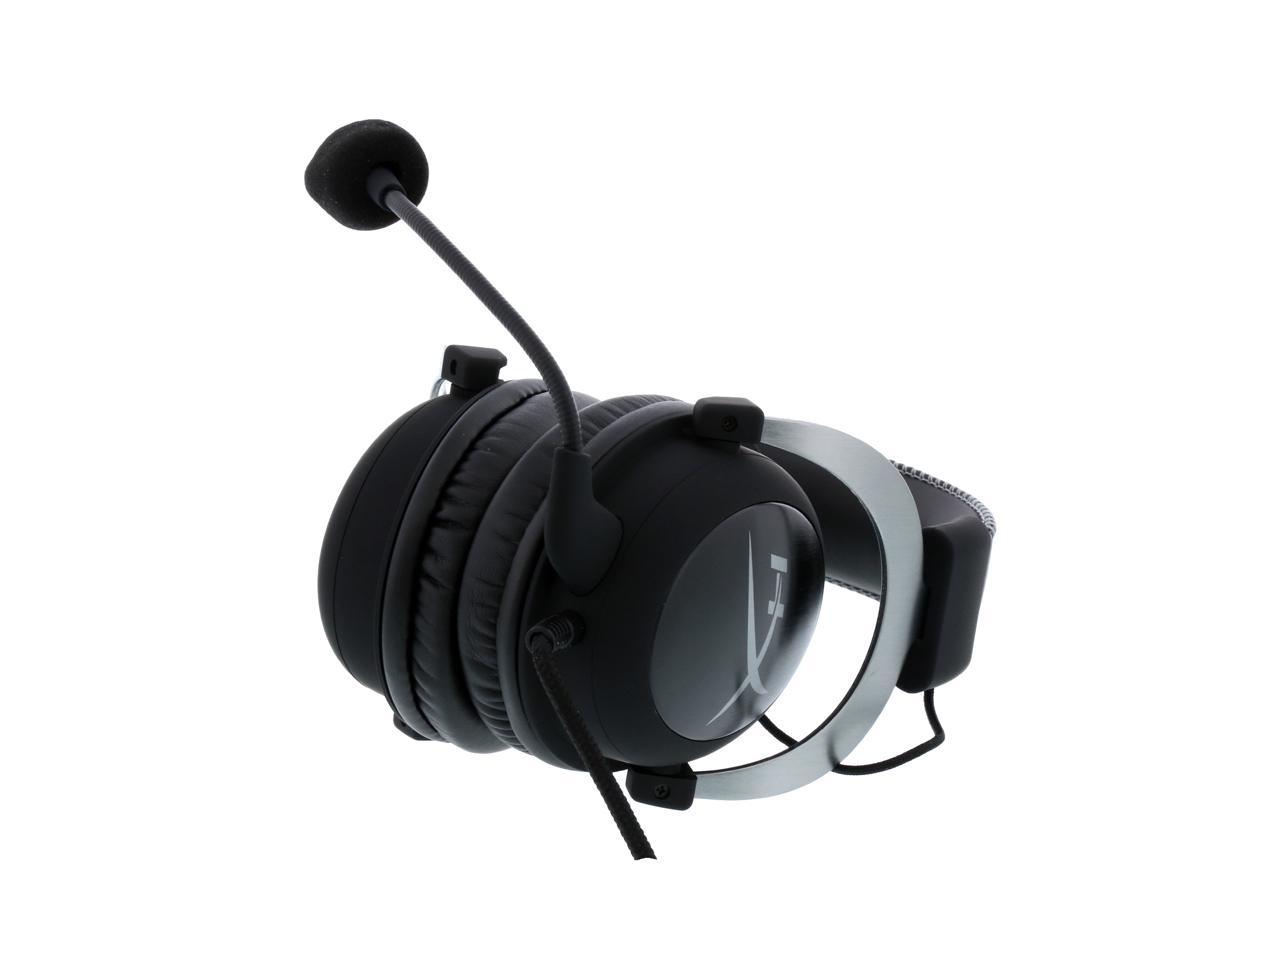 hun lof maat HyperX Cloud II Gaming Headset - 7.1 Virtual Surround Sound - Gun Metal -  Newegg.com